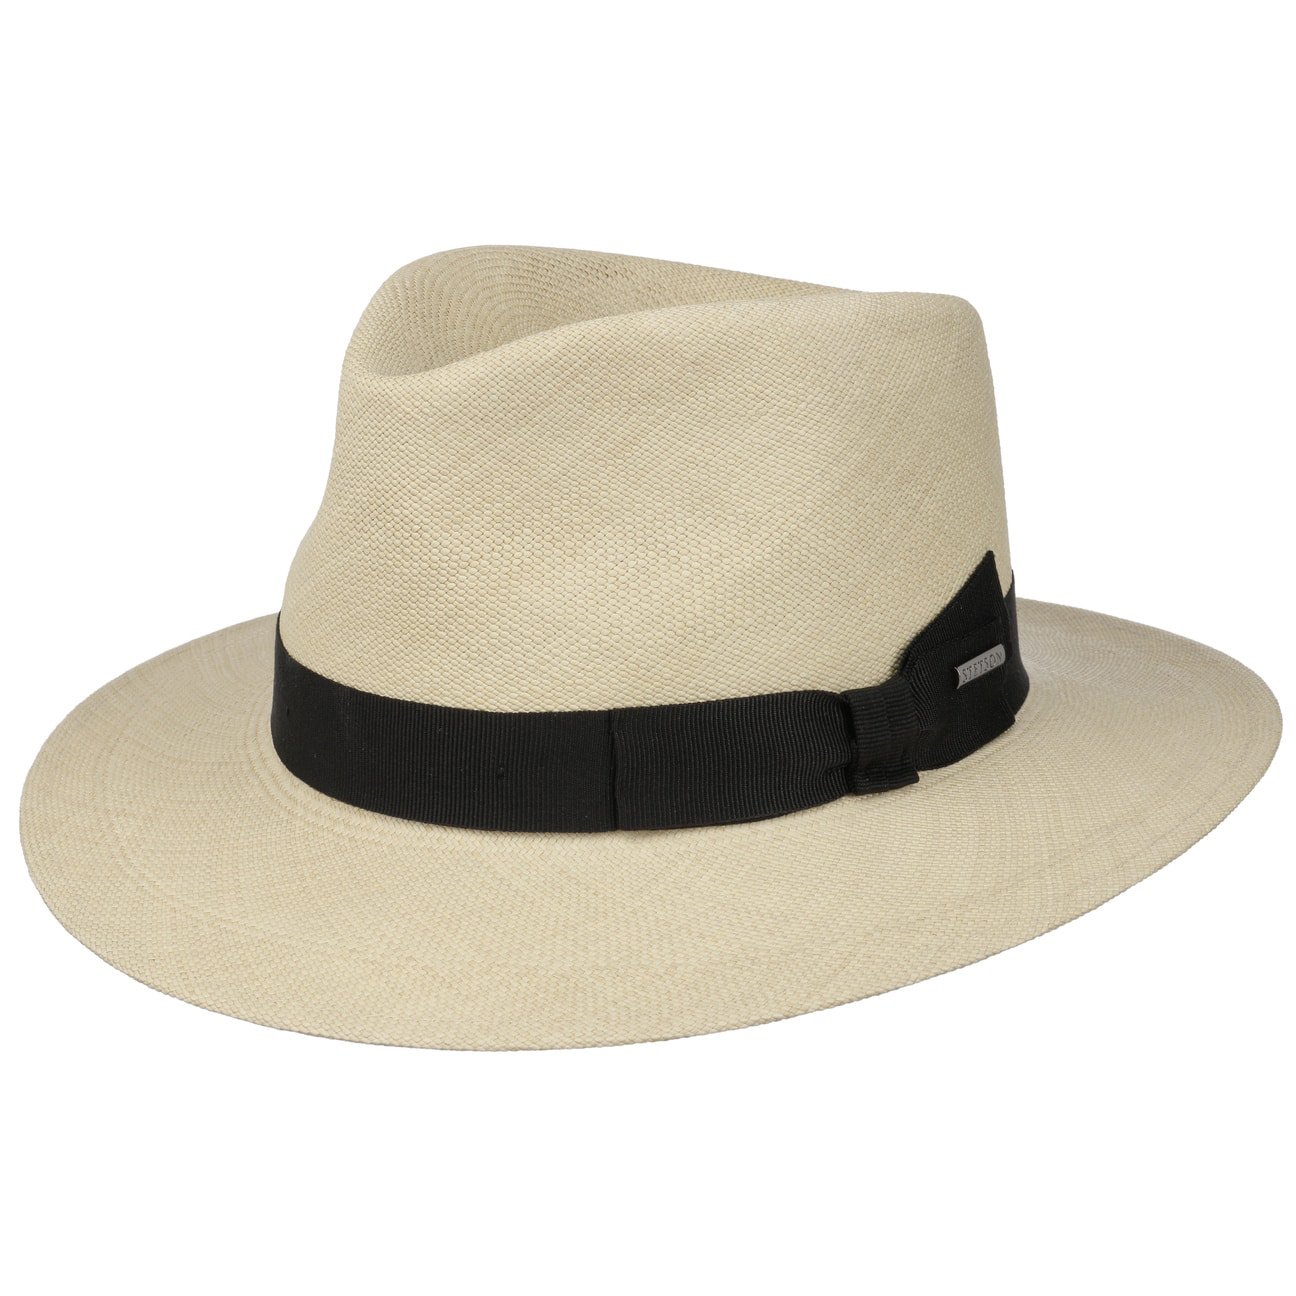 Stetson - Hillcrest Traveller Panama Hat - Nature